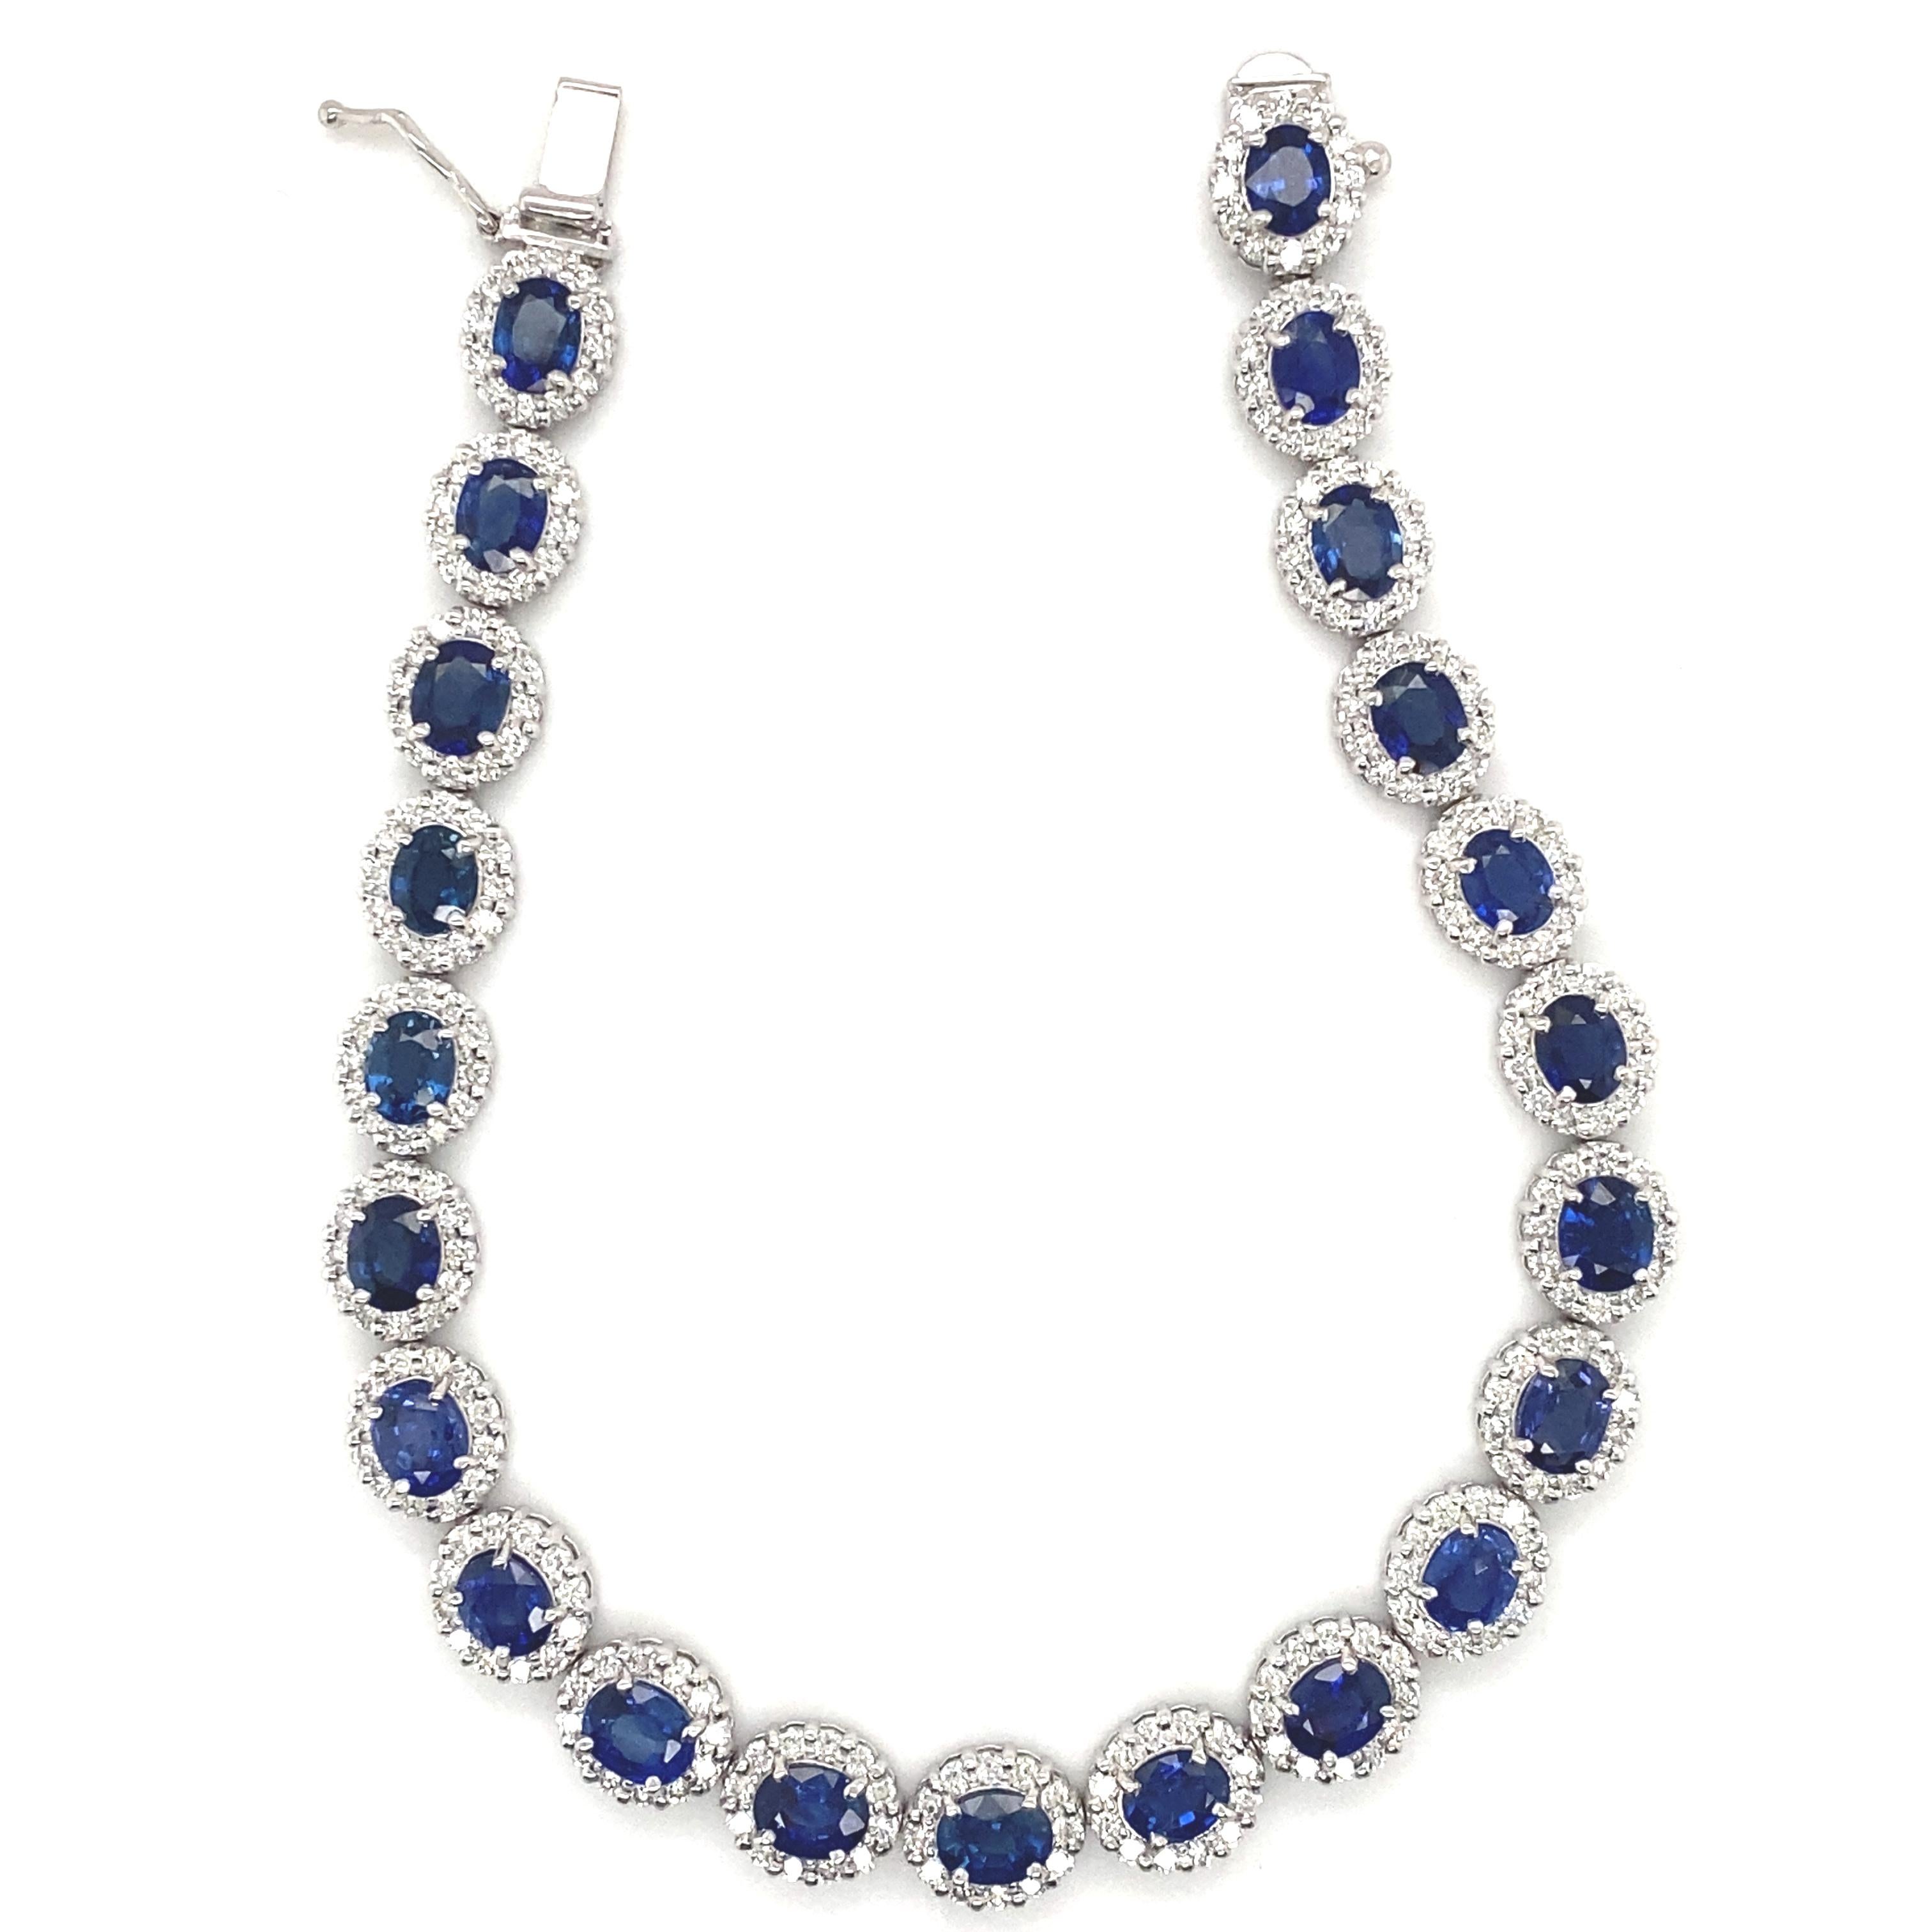 Modern 9.77 Carat Natural Sapphire and Diamonds Tennis Bracelet Set in Platinum